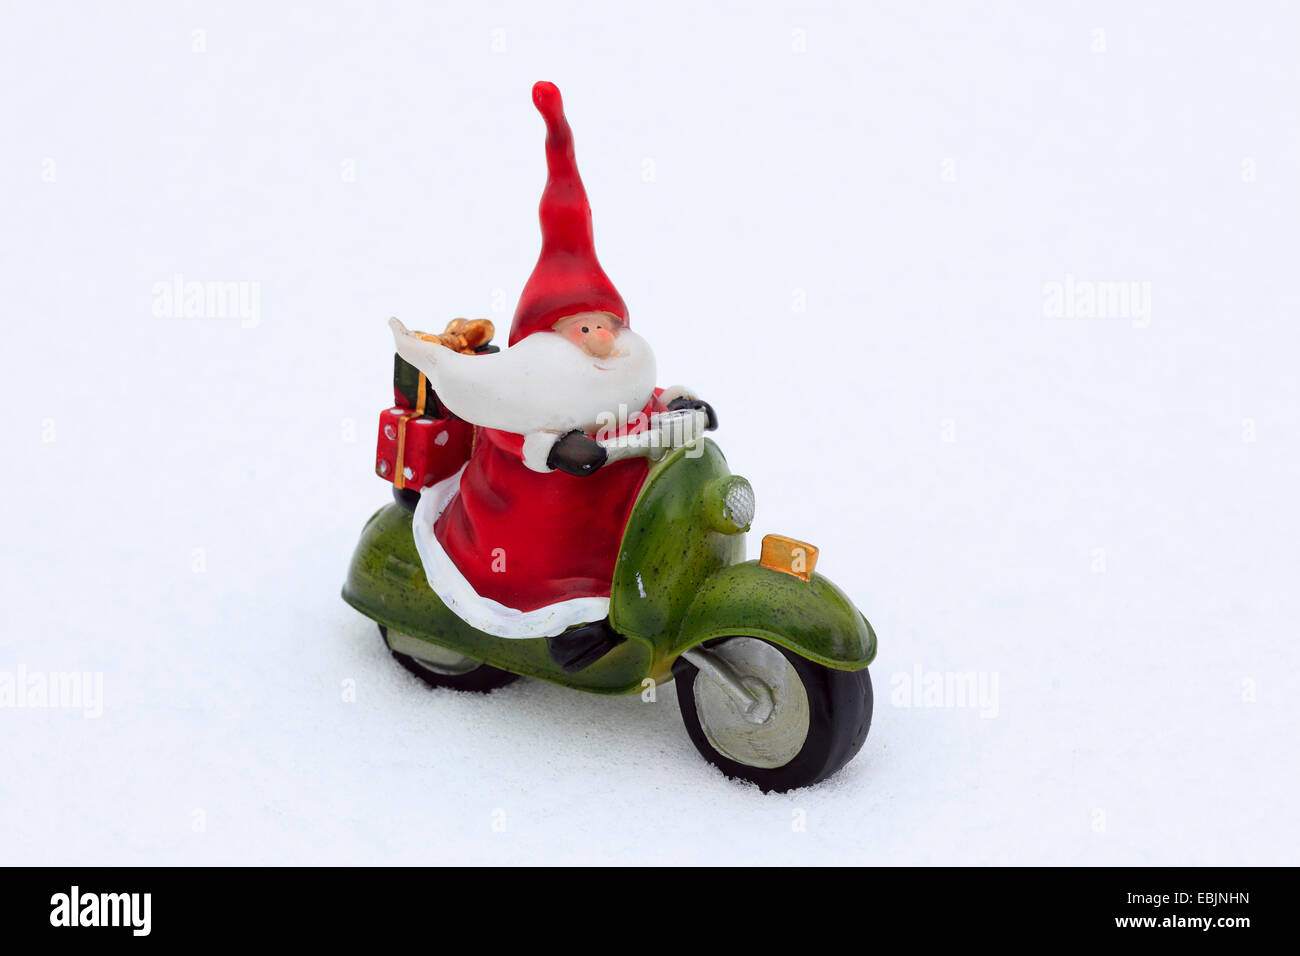 Santa claus on motor bike, ceramic figure in snow, Switzerland Stock Photo